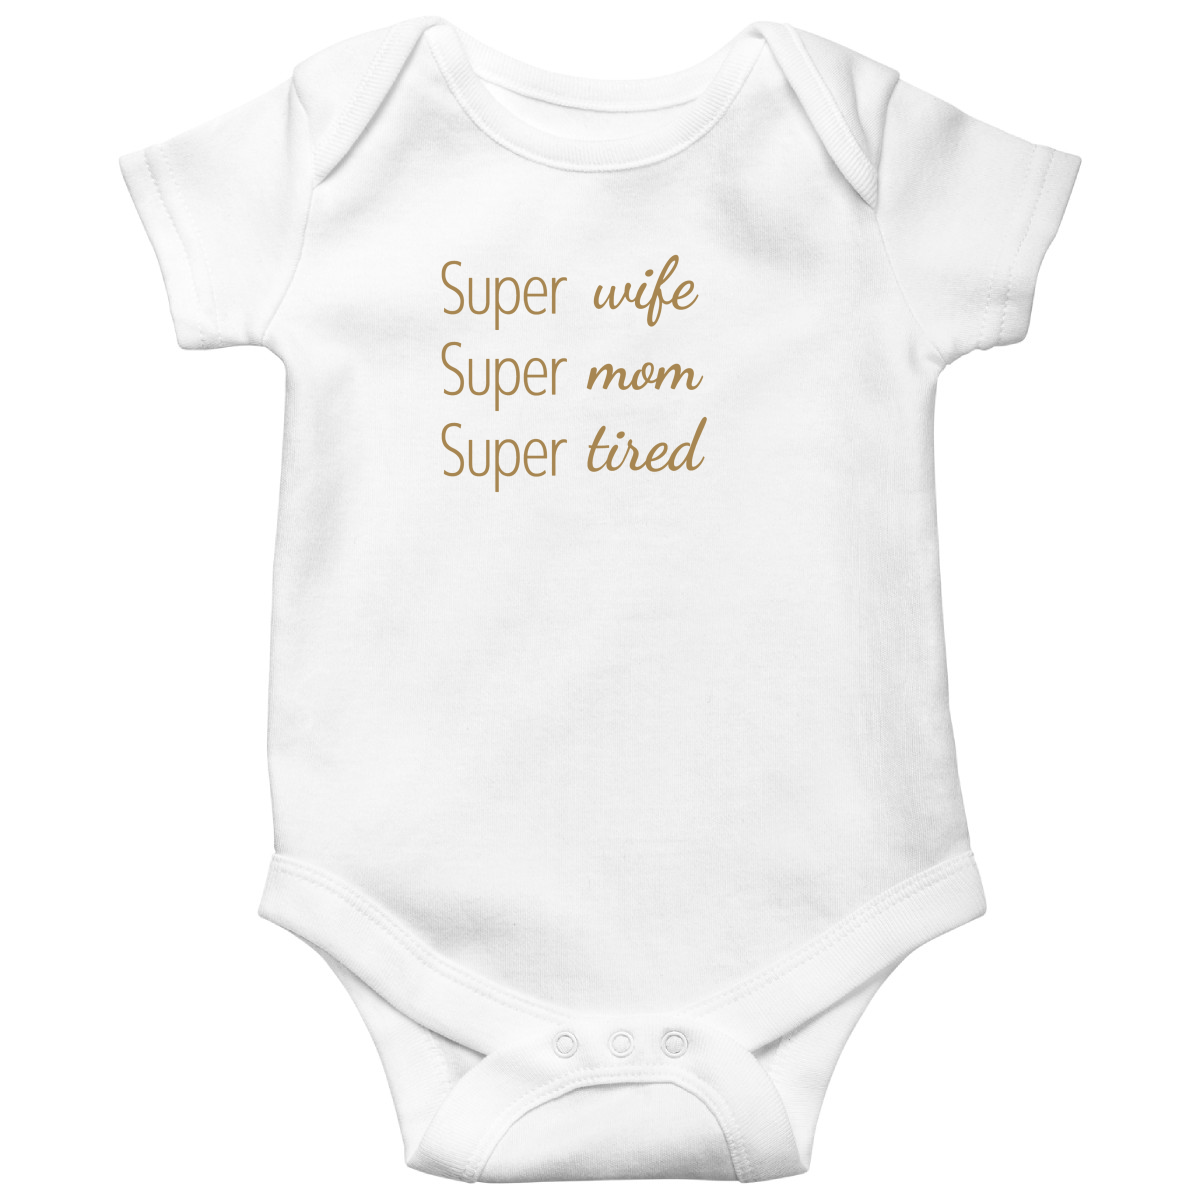 Super Mom Super Wife Super Tired Baby Bodysuits | White